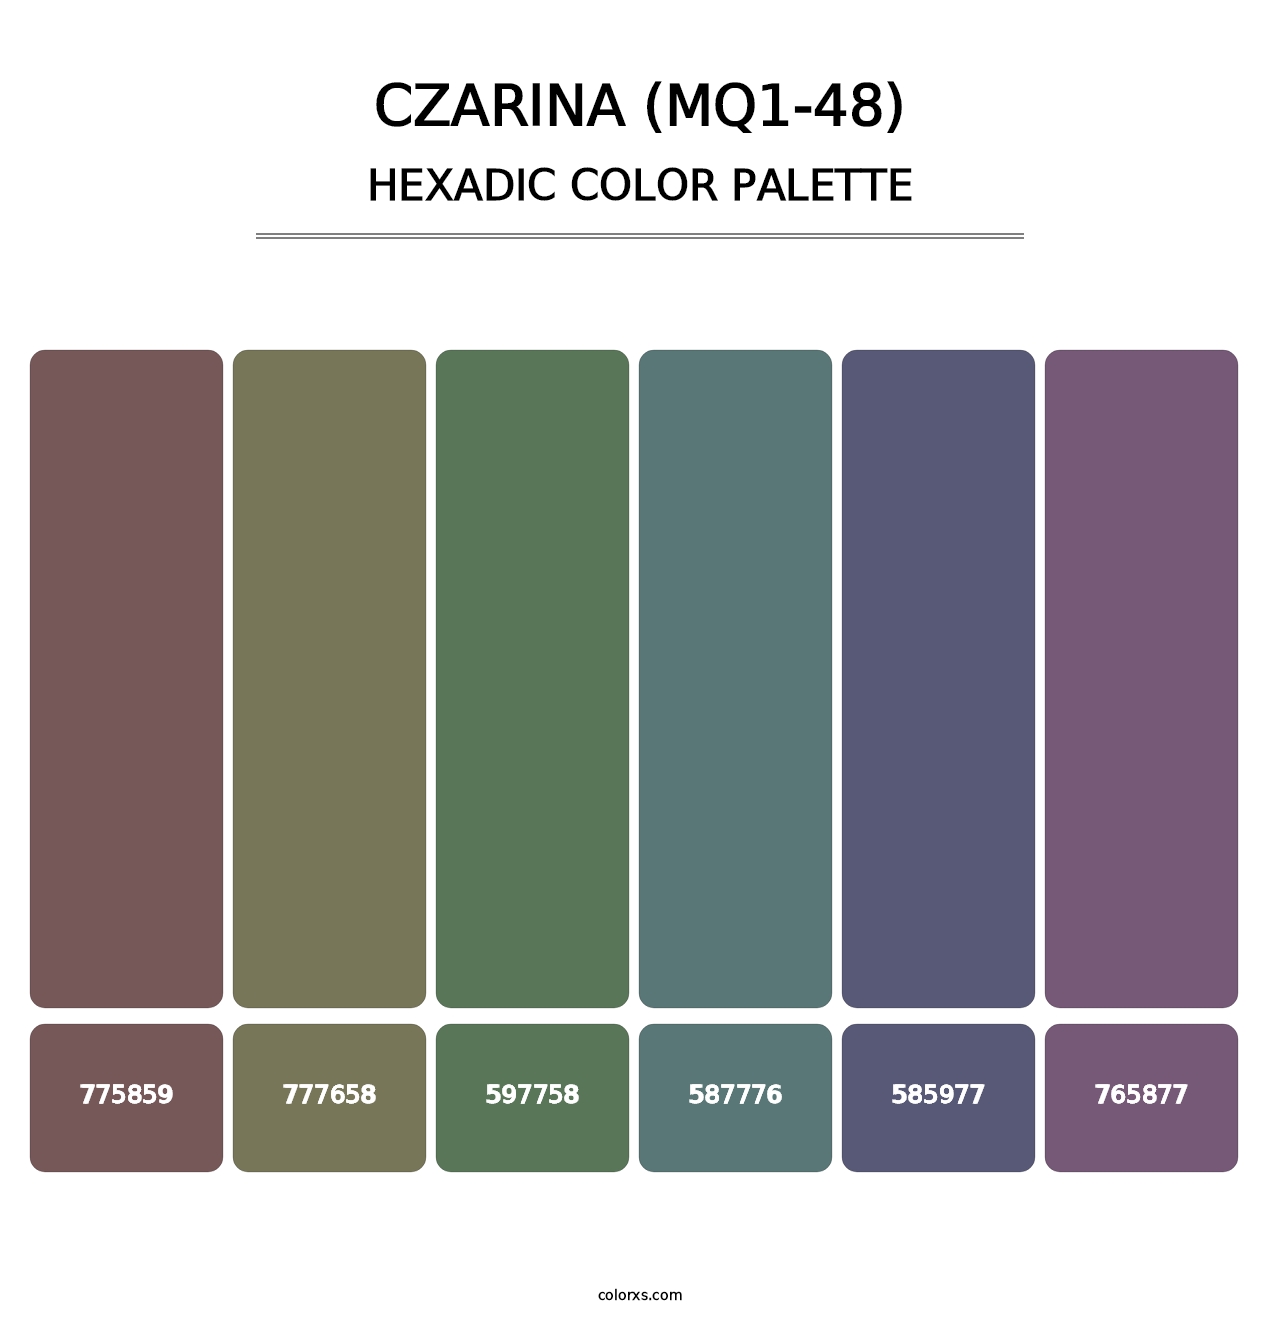 Czarina (MQ1-48) - Hexadic Color Palette